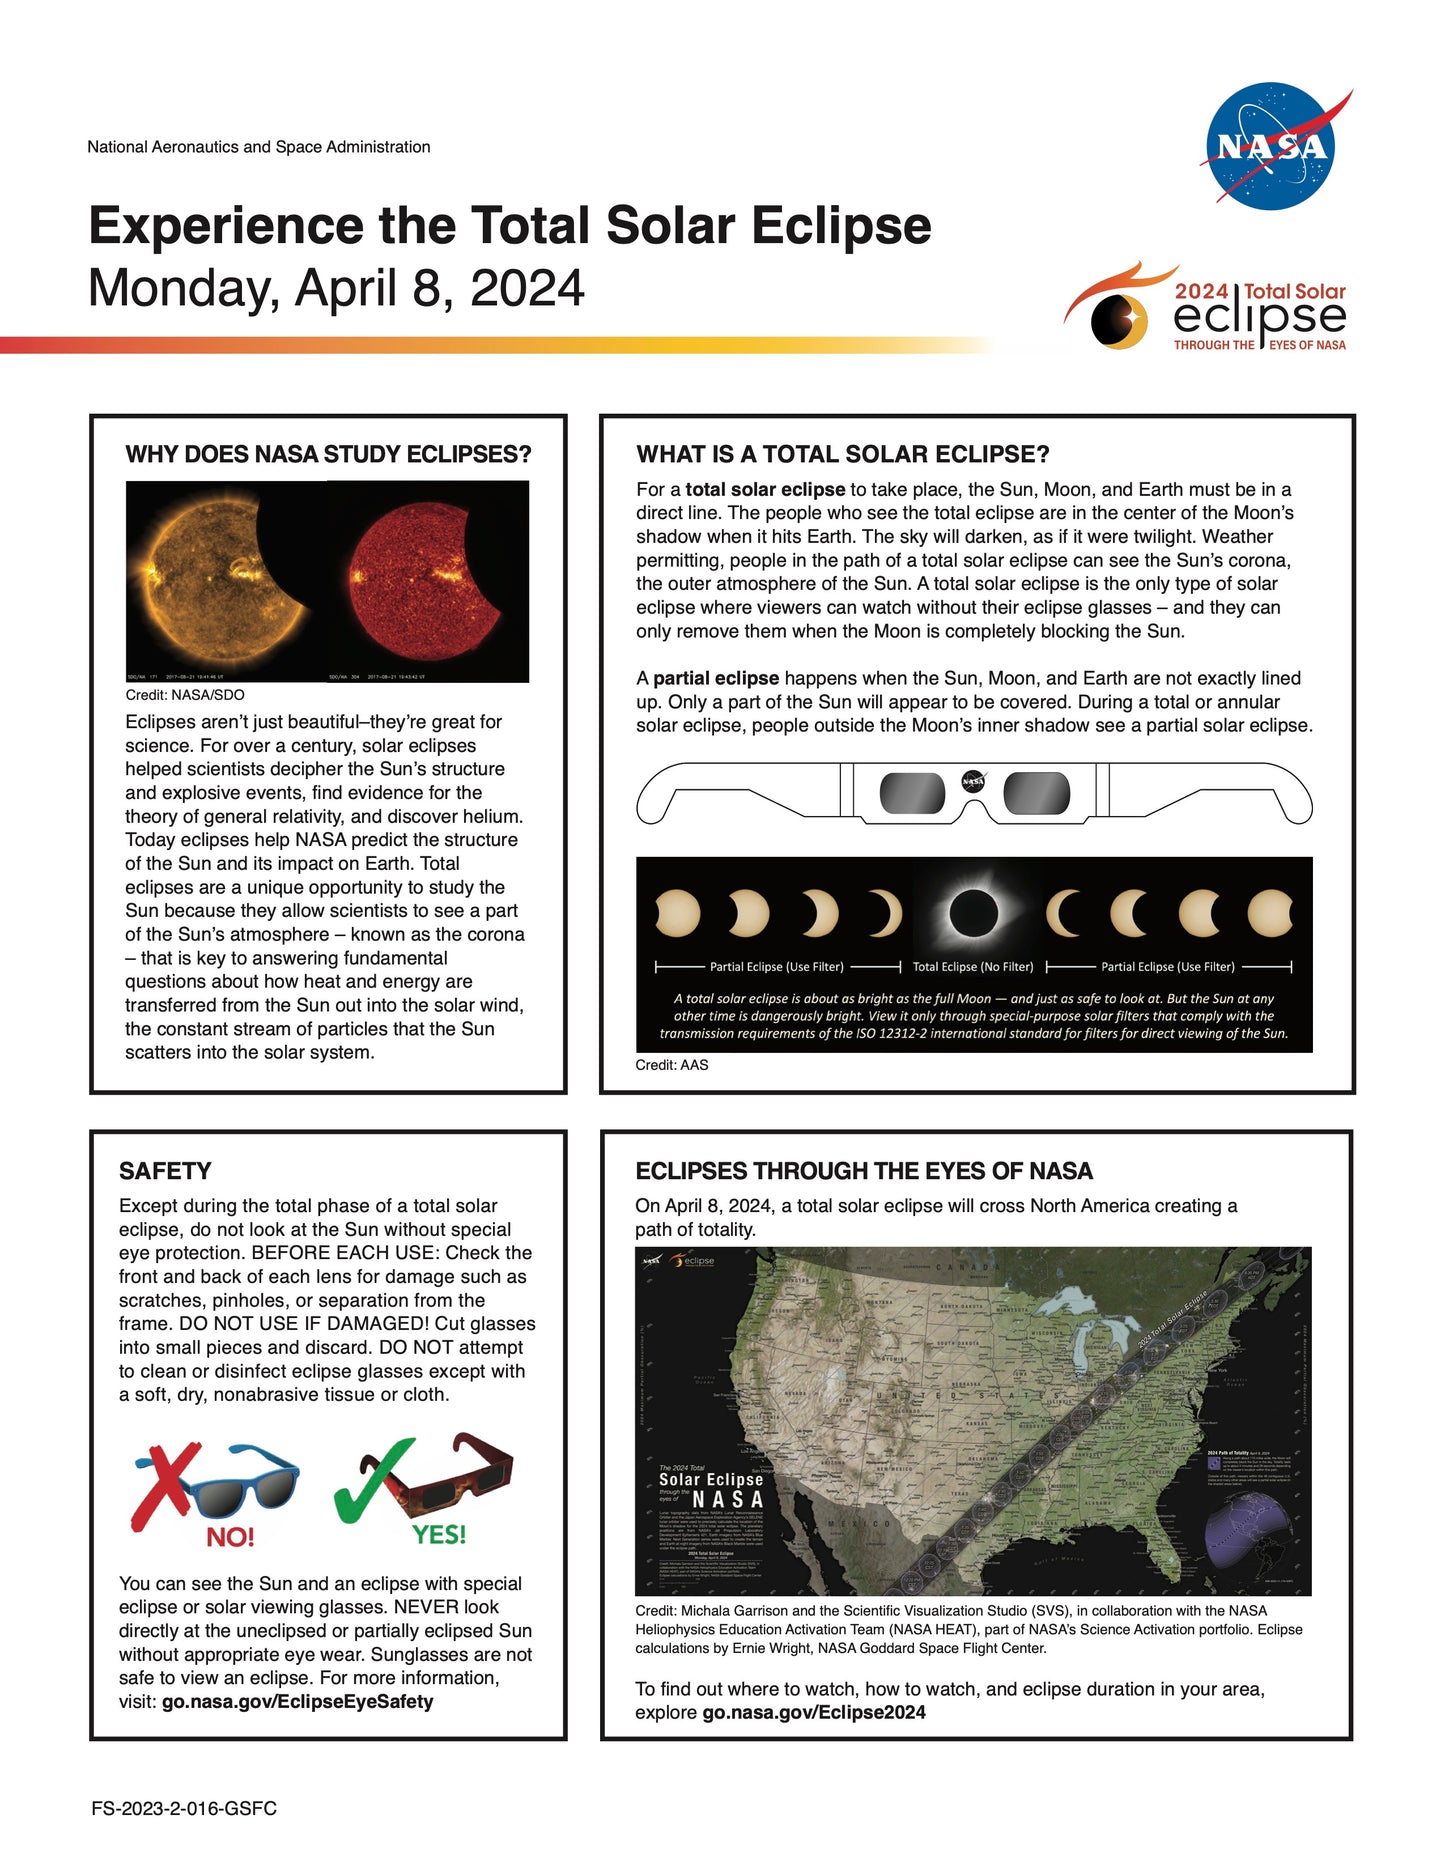 Solar Eclipse Factsheet